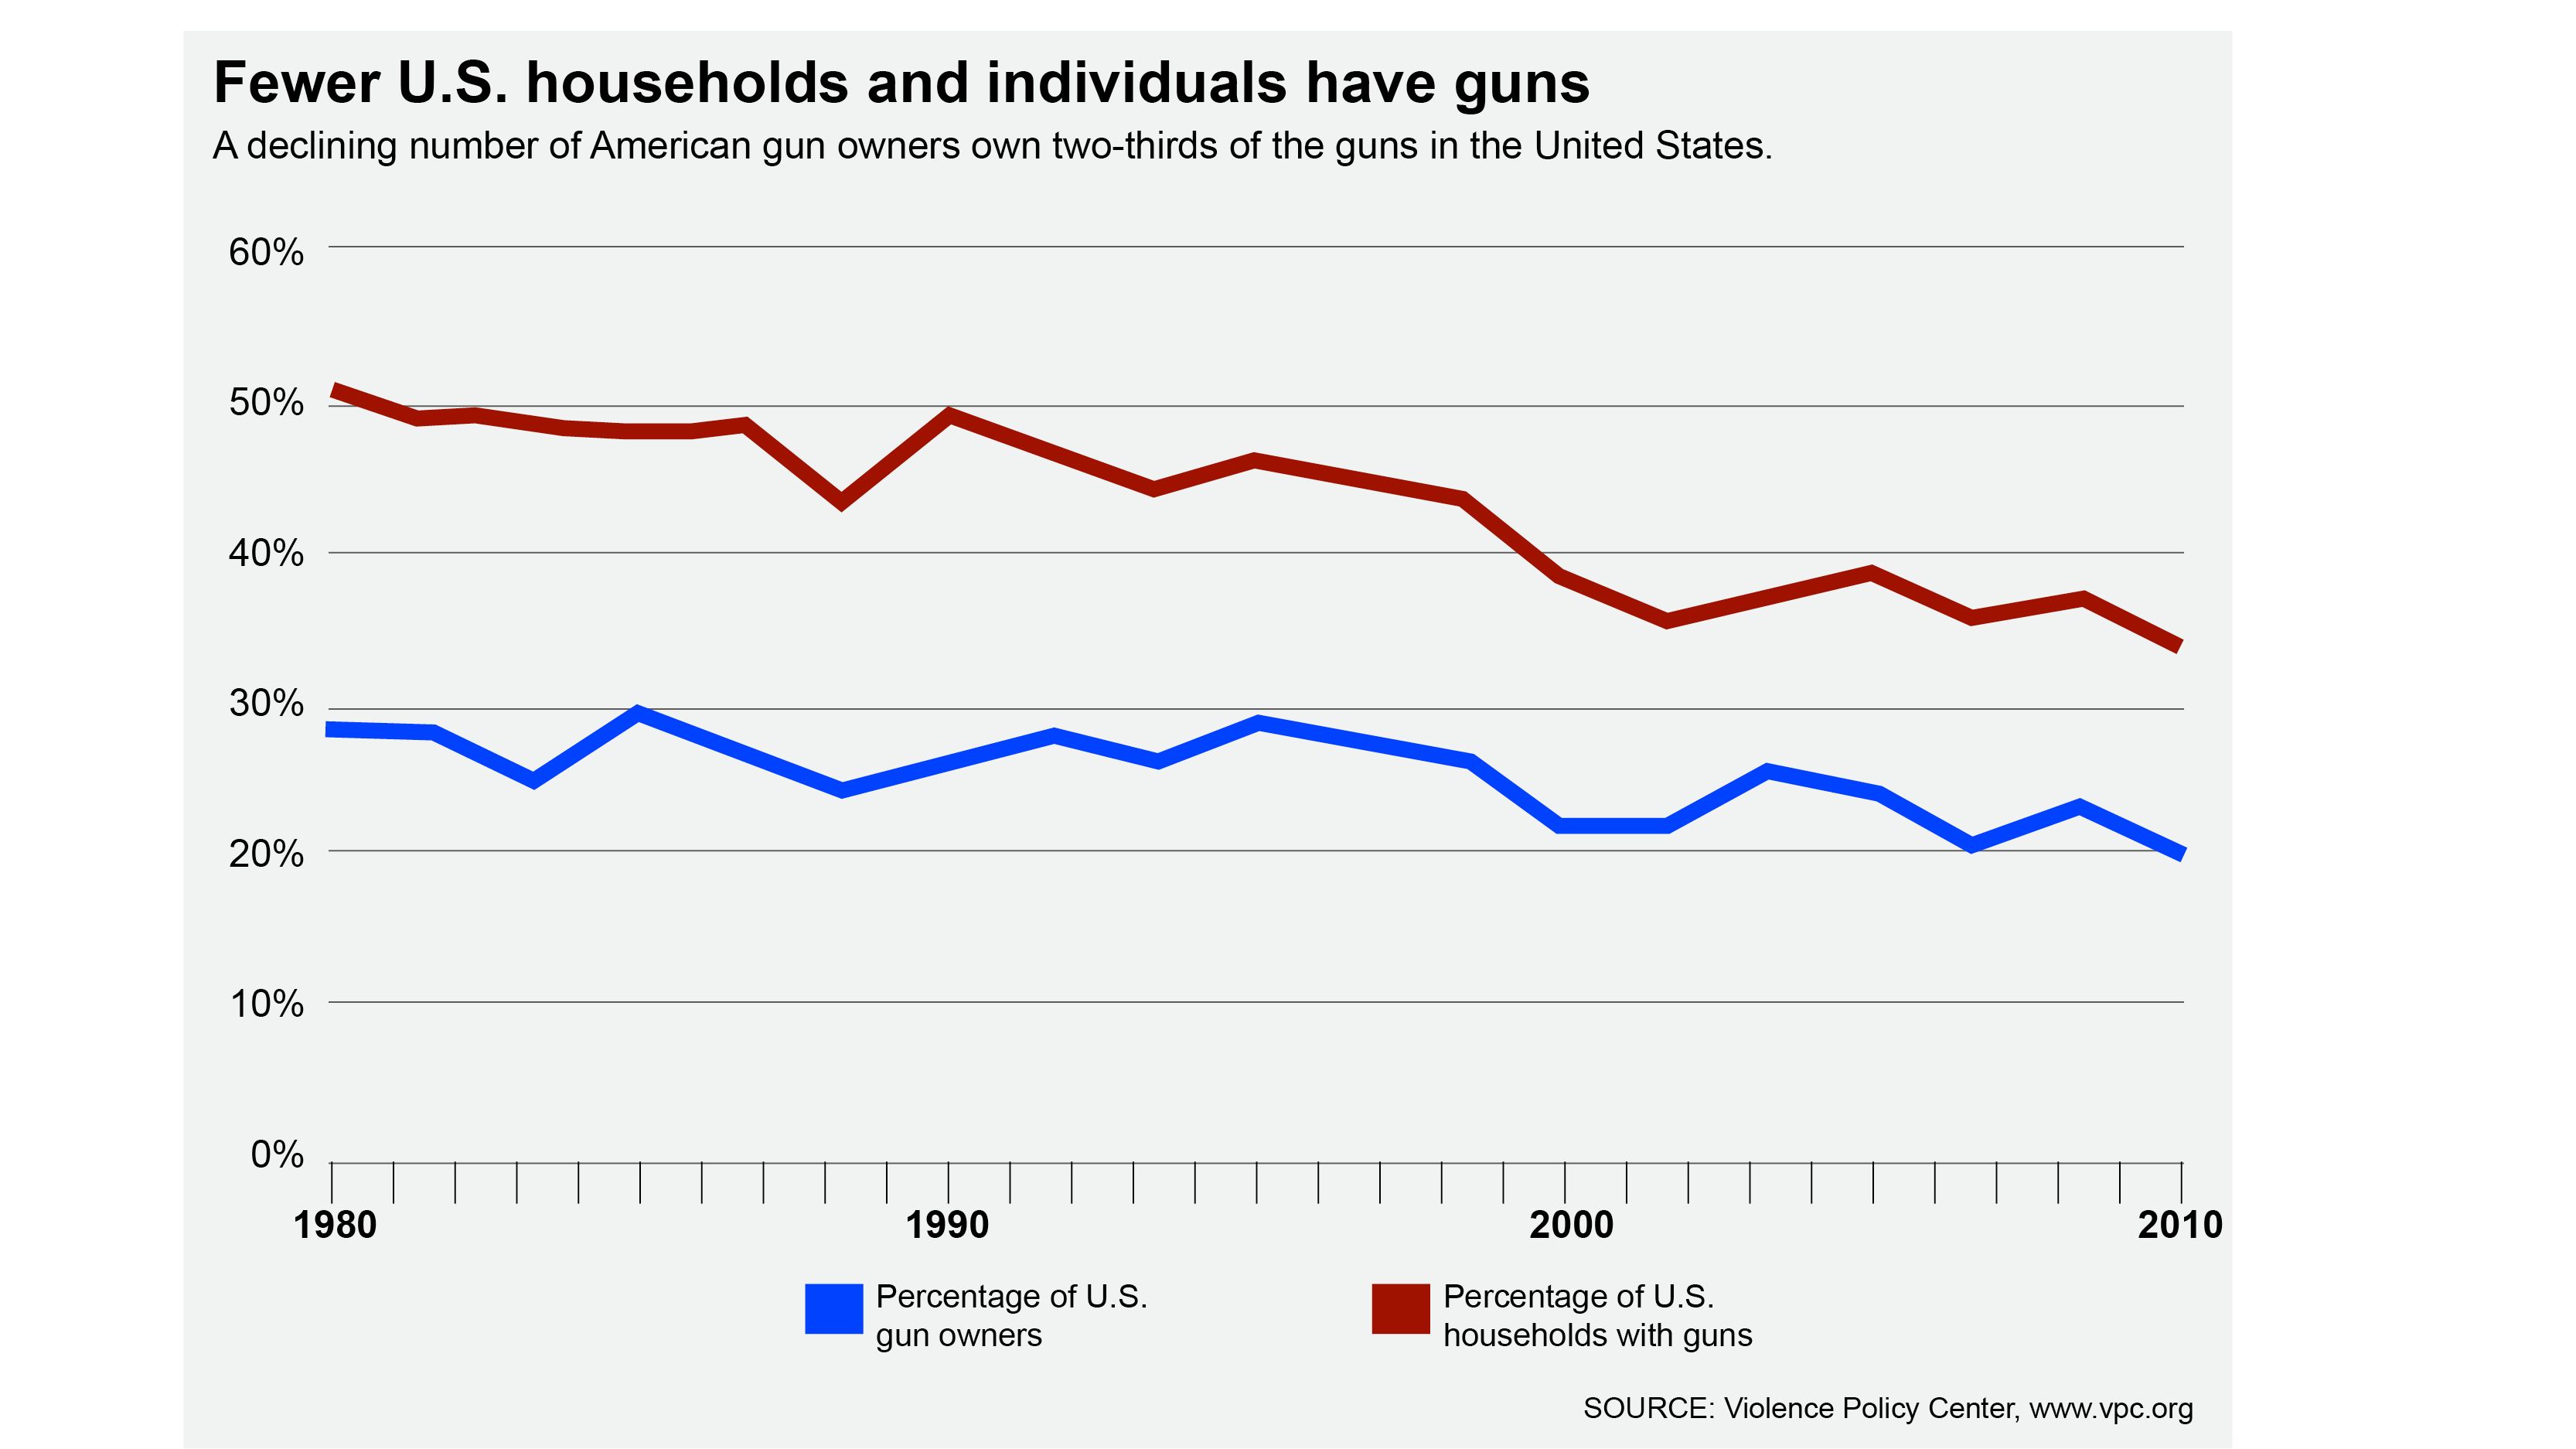 Gun ownership declining in U.S.